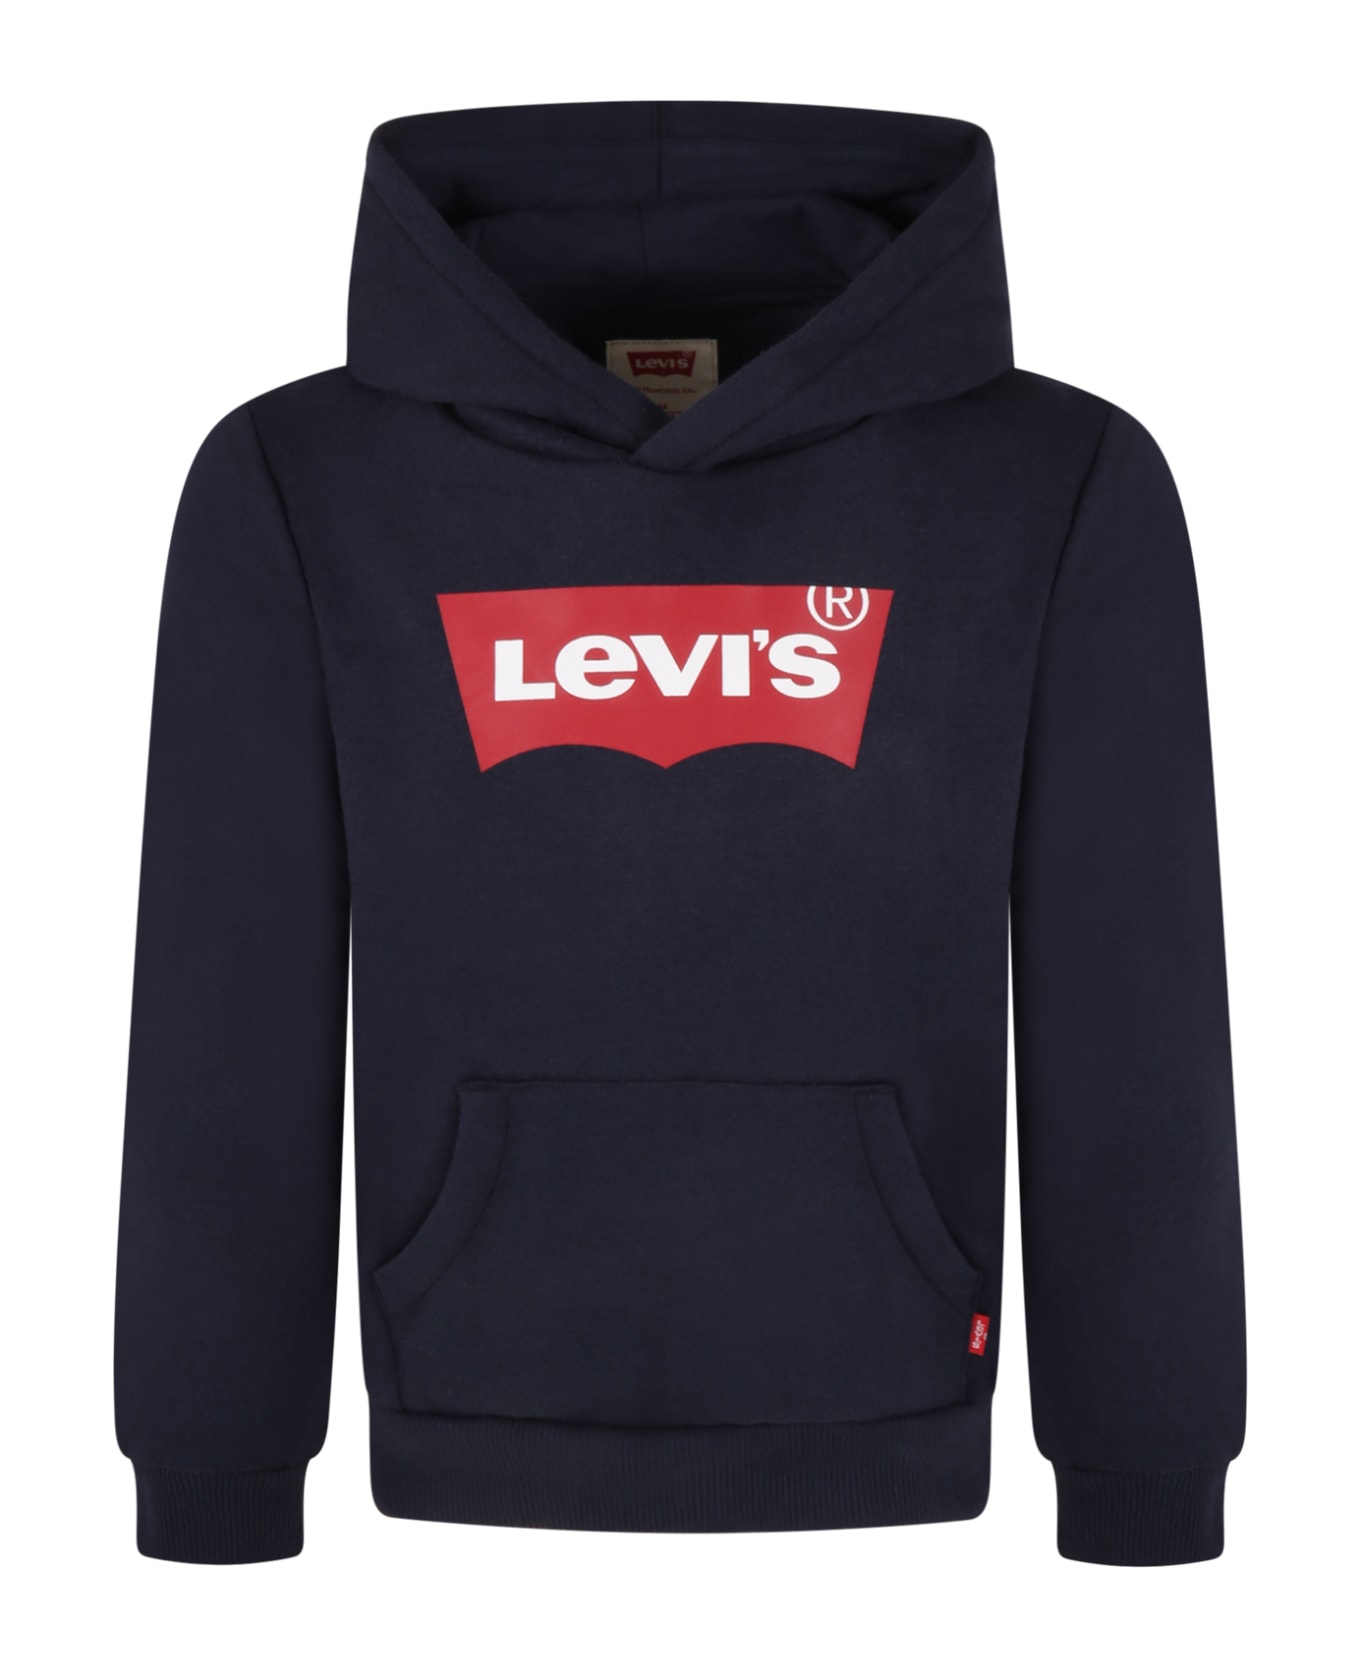 Levi's Blue Sweatshirt For Kids With White Logo - Blue